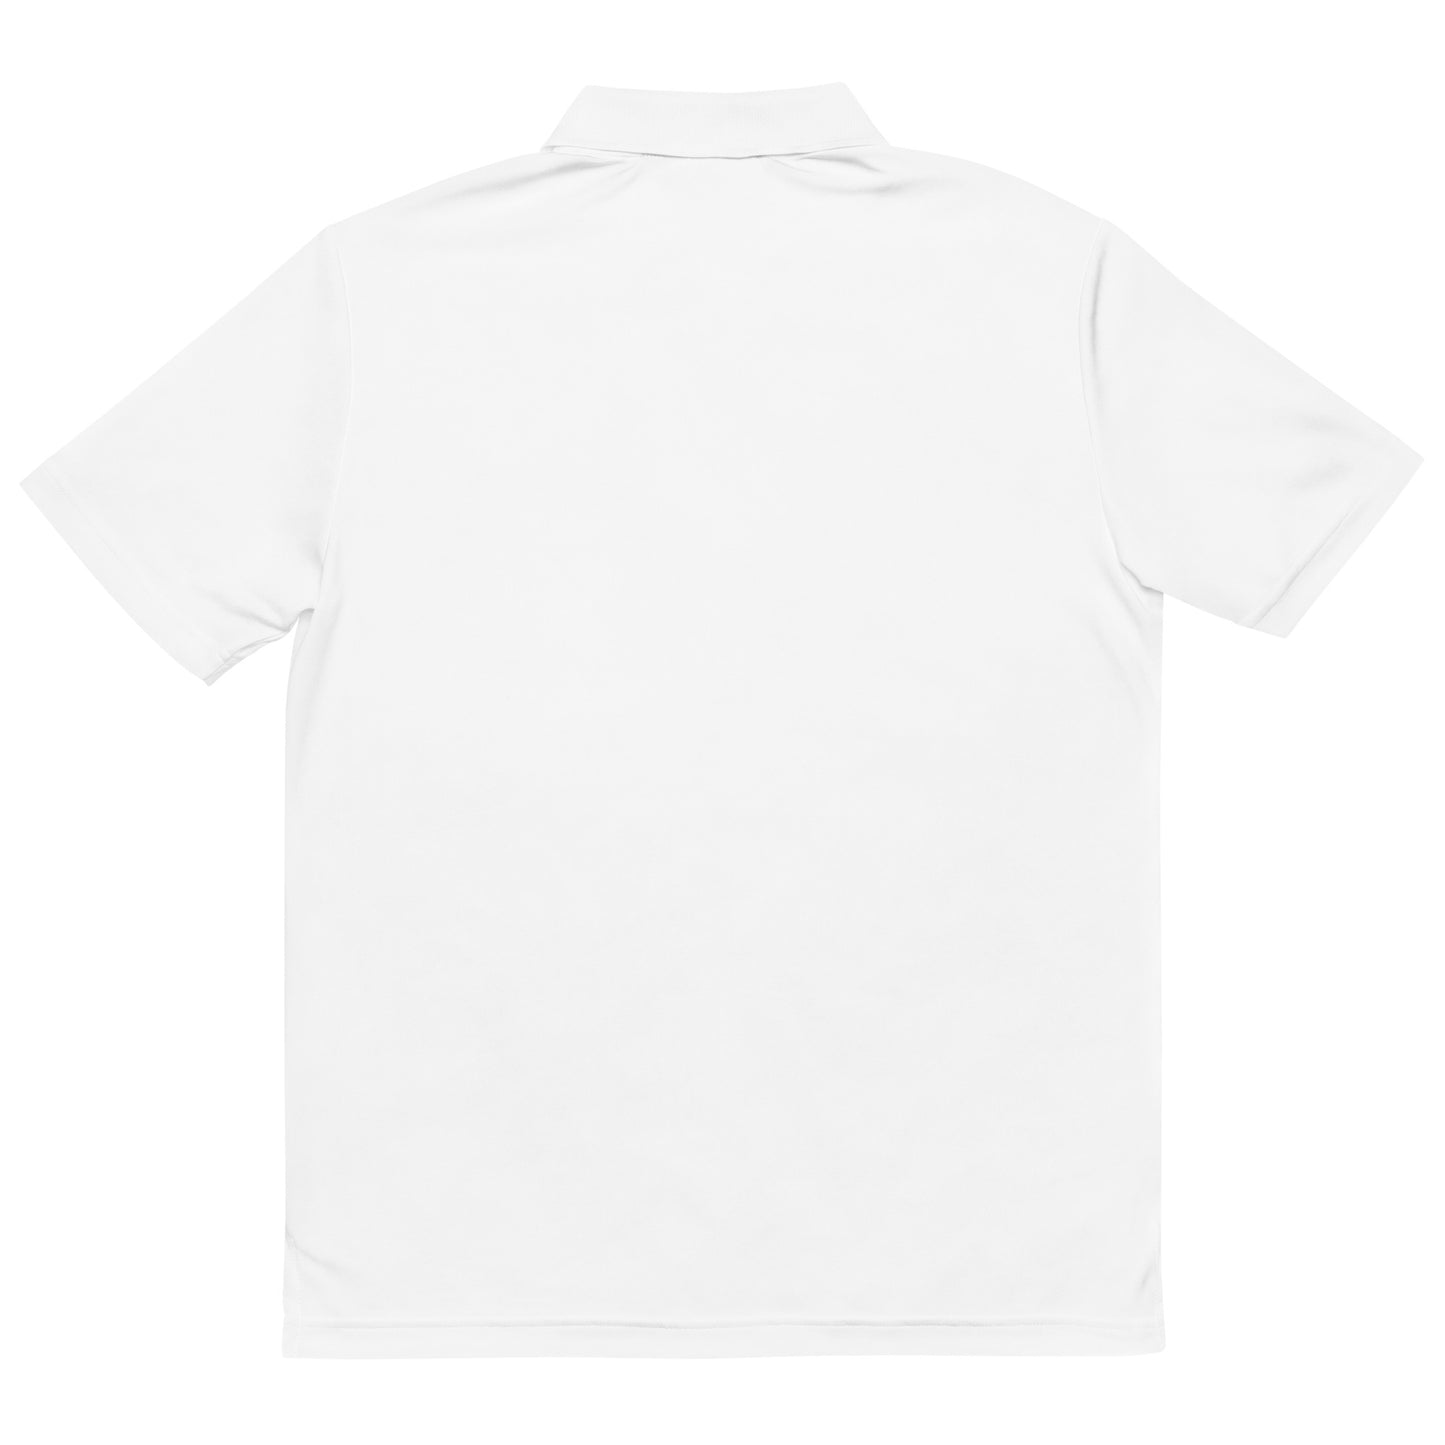 CLINE X ADIDAS Recycled Polo Shirt